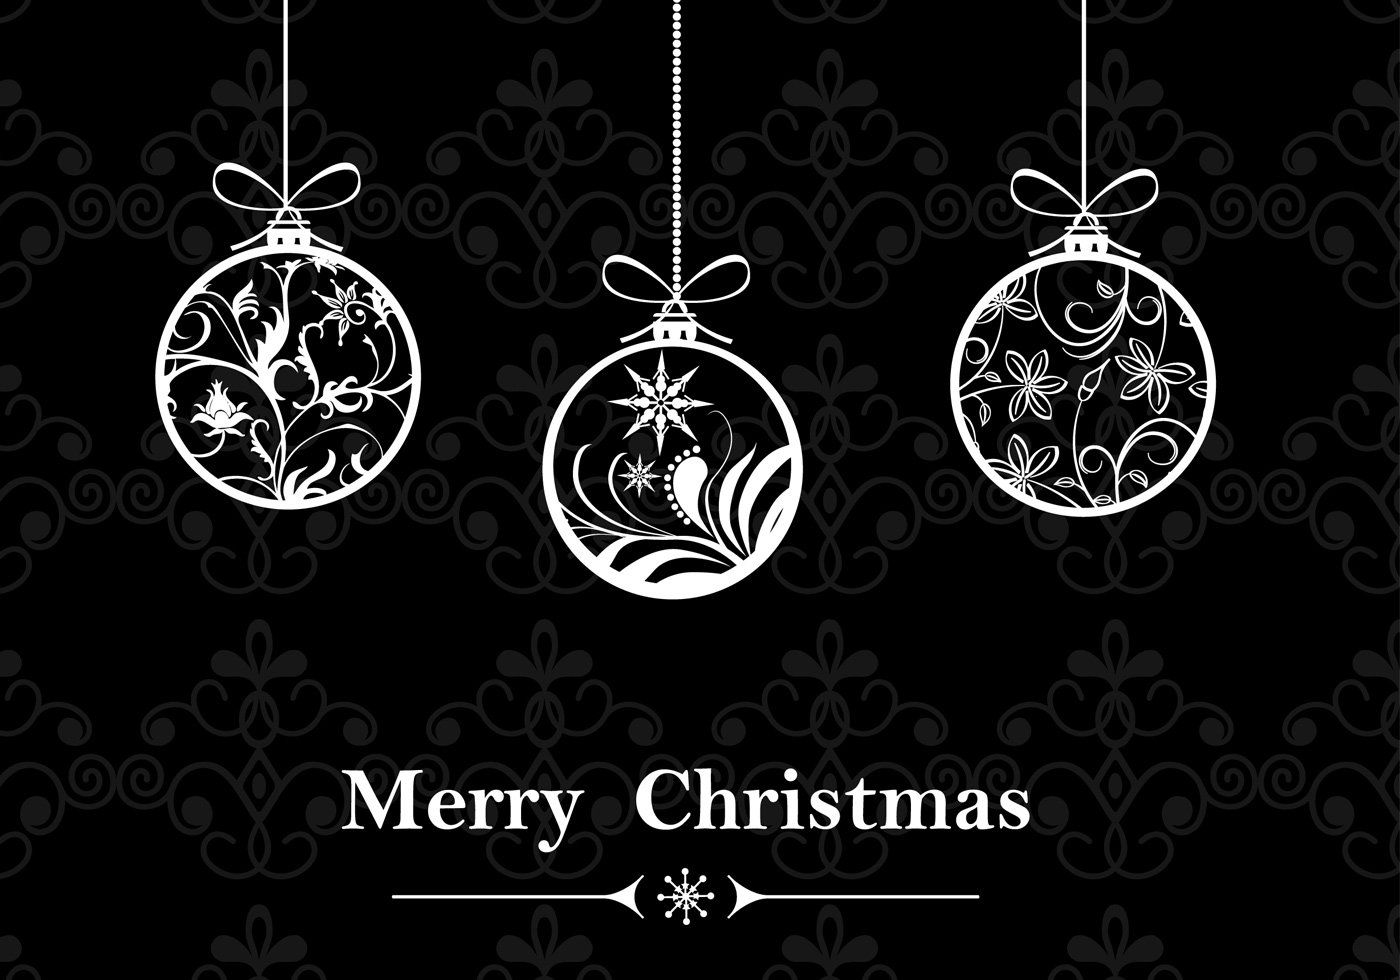 Black & White Christmas Ornament Wallpaper, Brush, and Pattern Pack Photohop Brushes at Brusheezy!